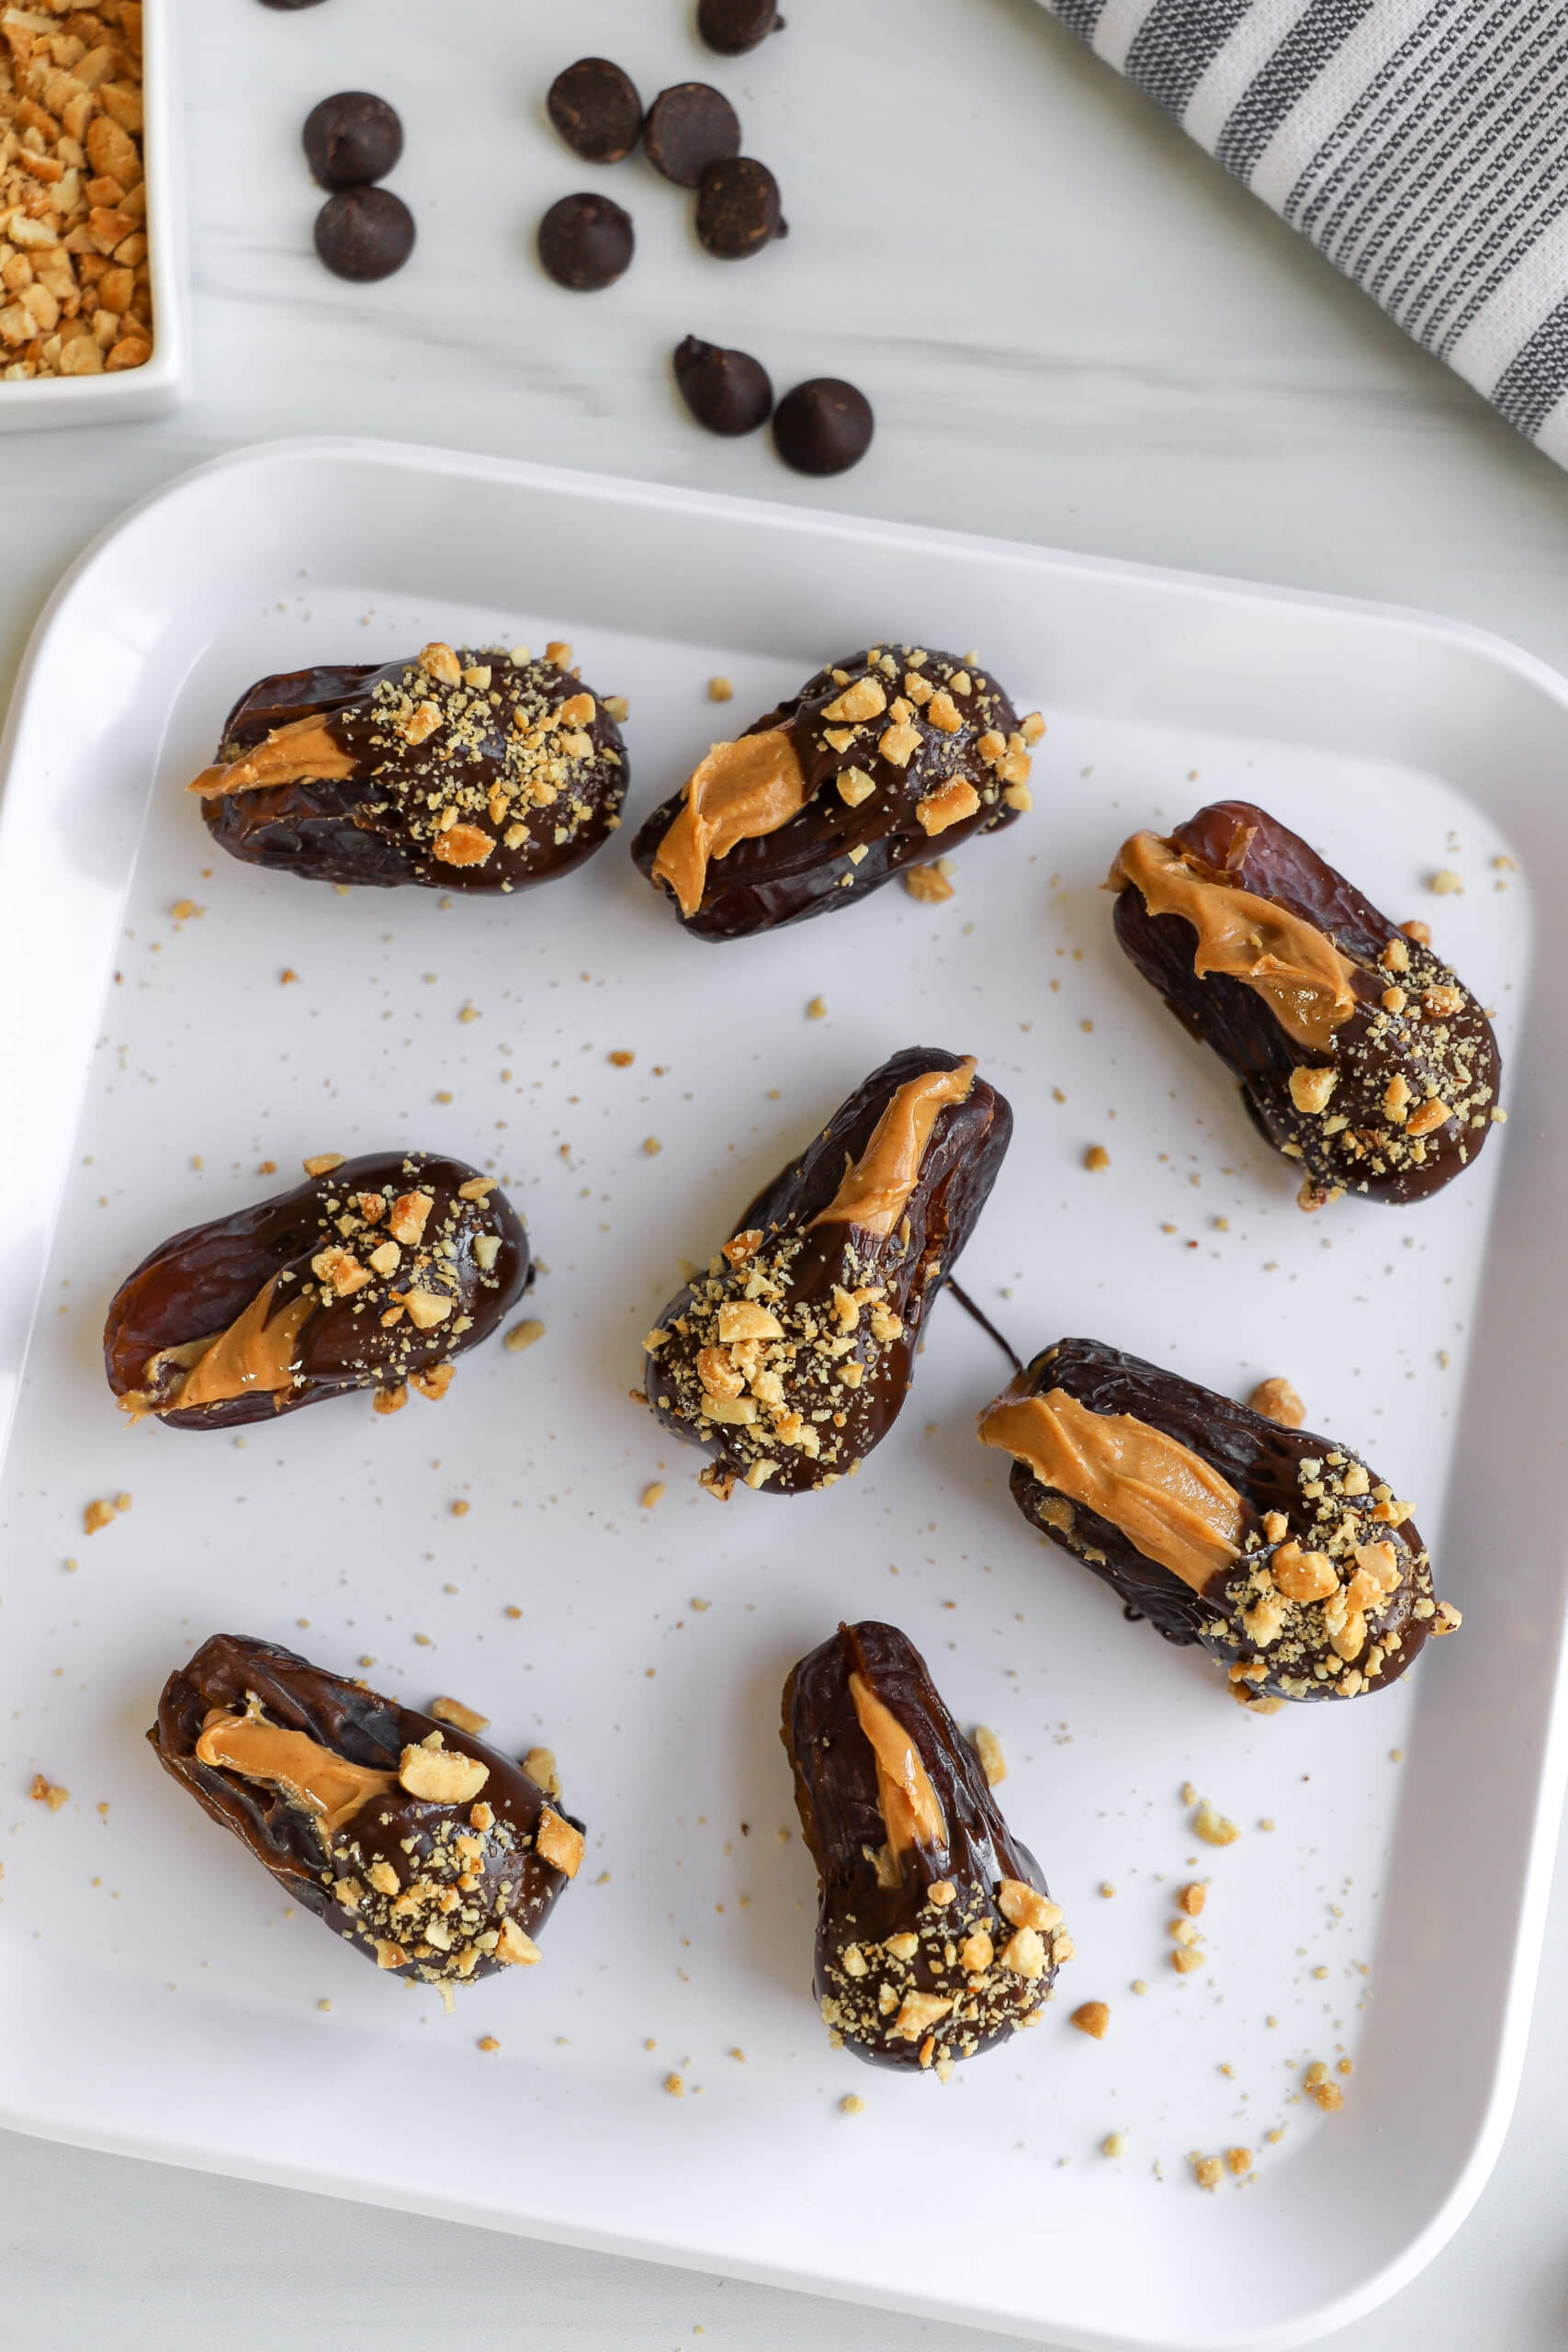 Chocolate-Dipped Peanut Butter Stuffed Dates